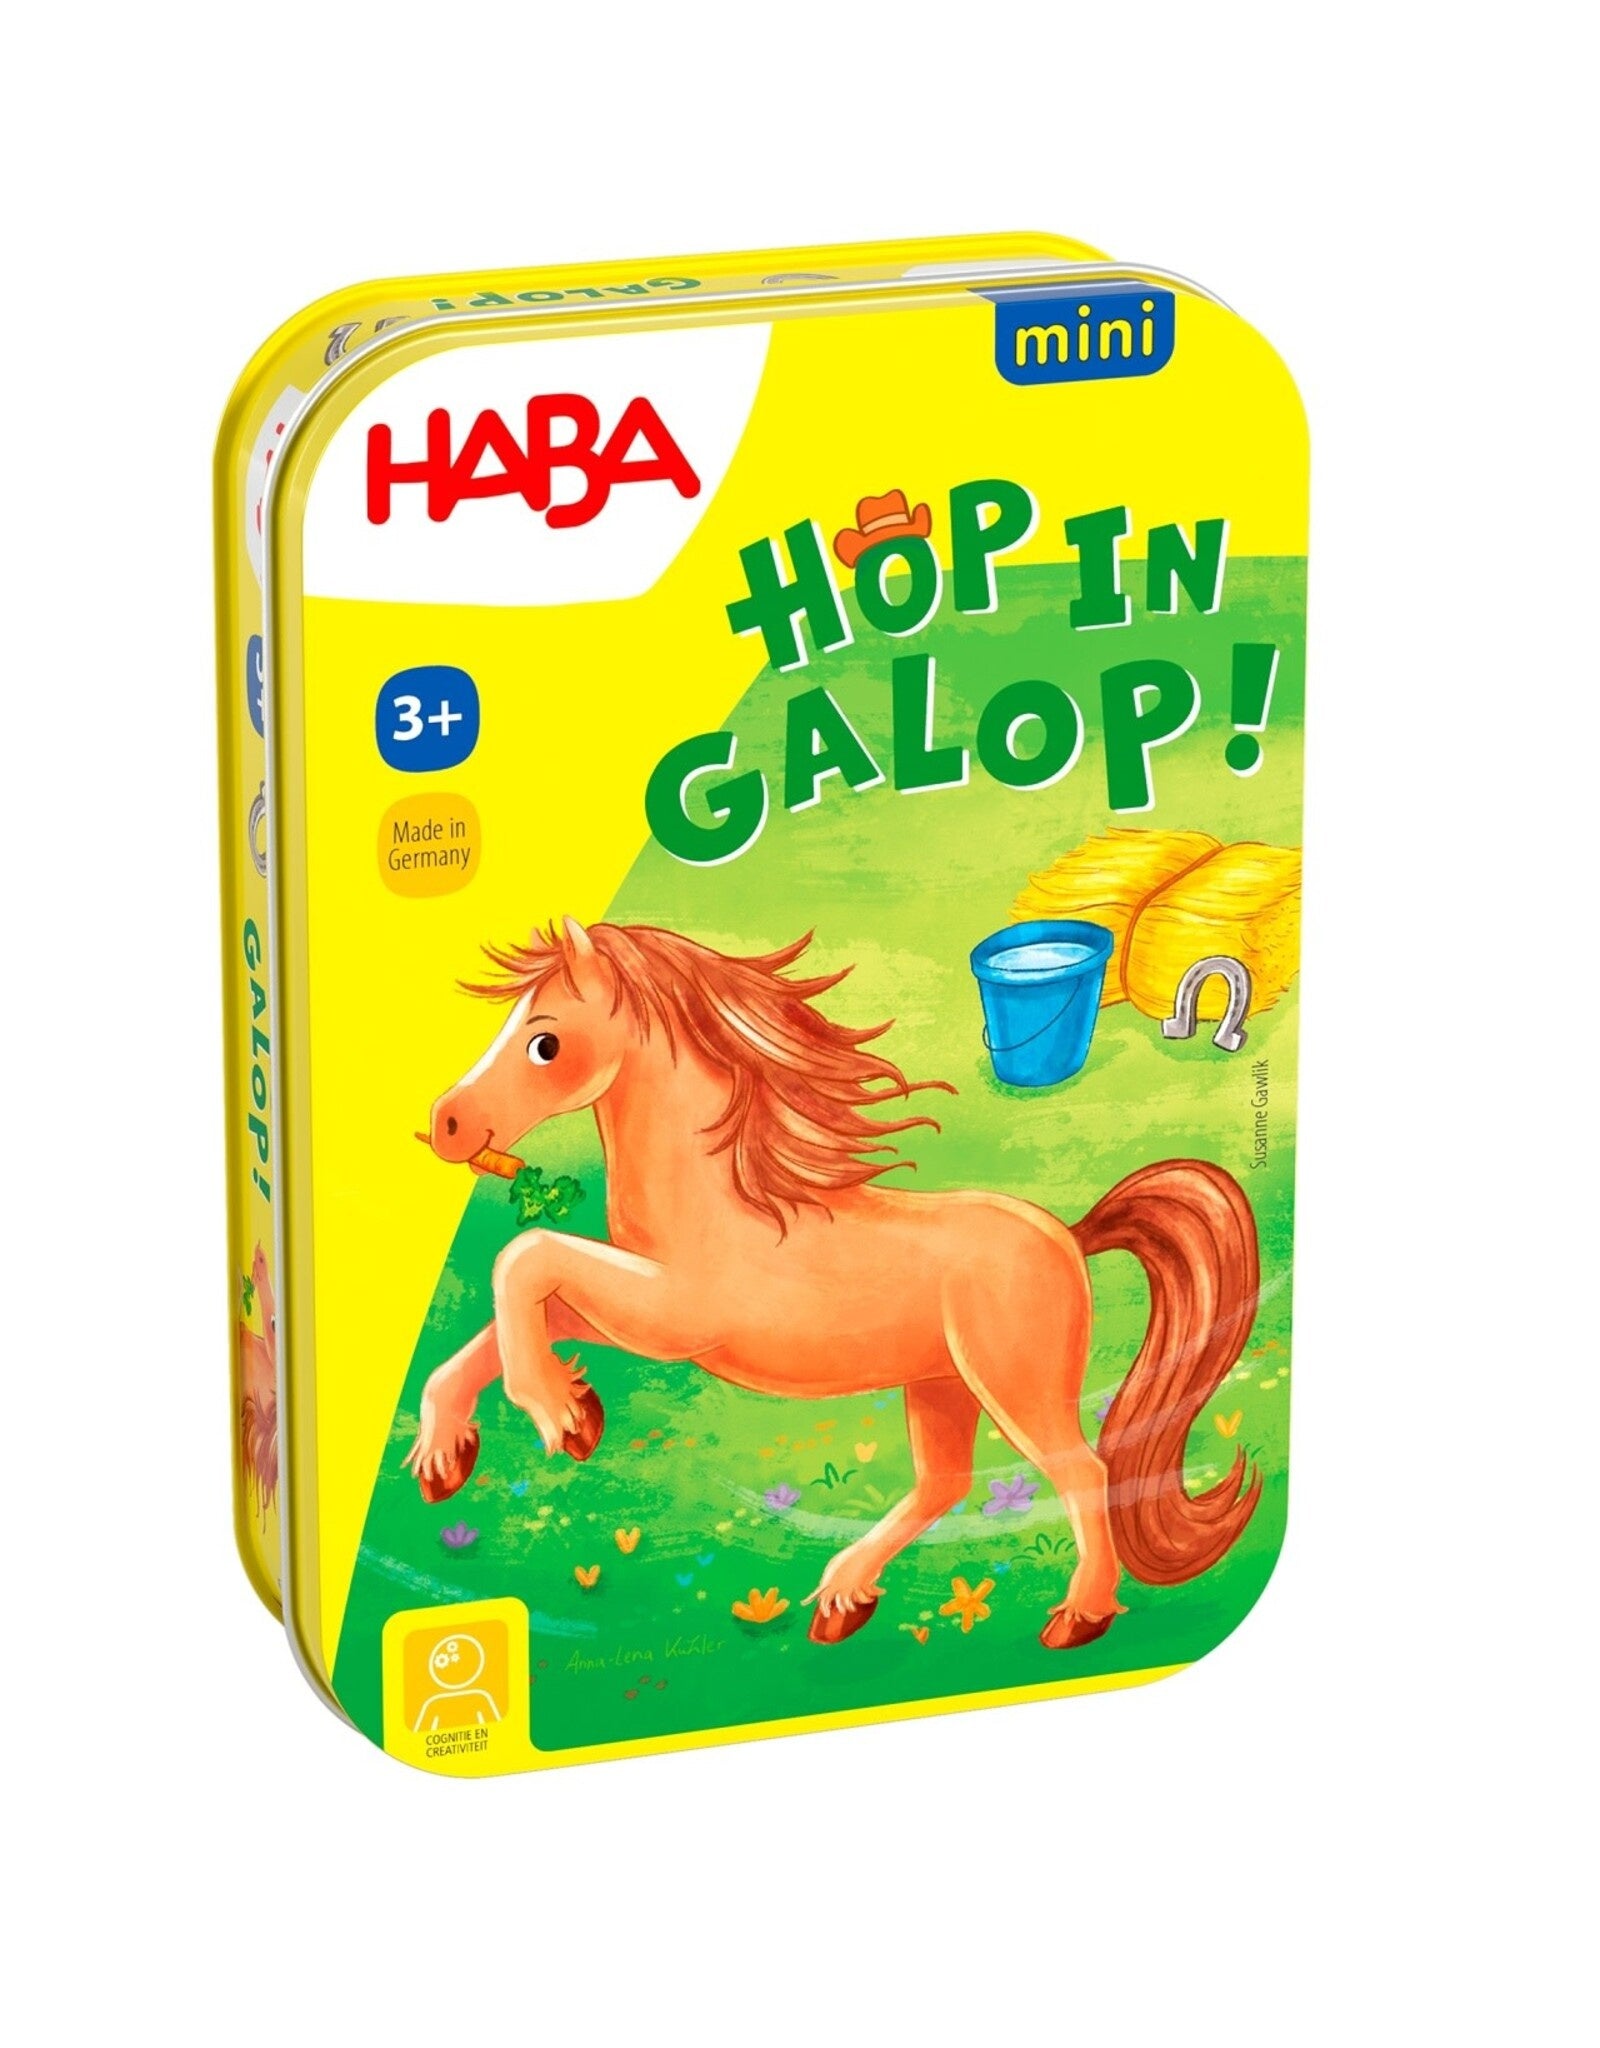 haba-mini-hop-in-galop